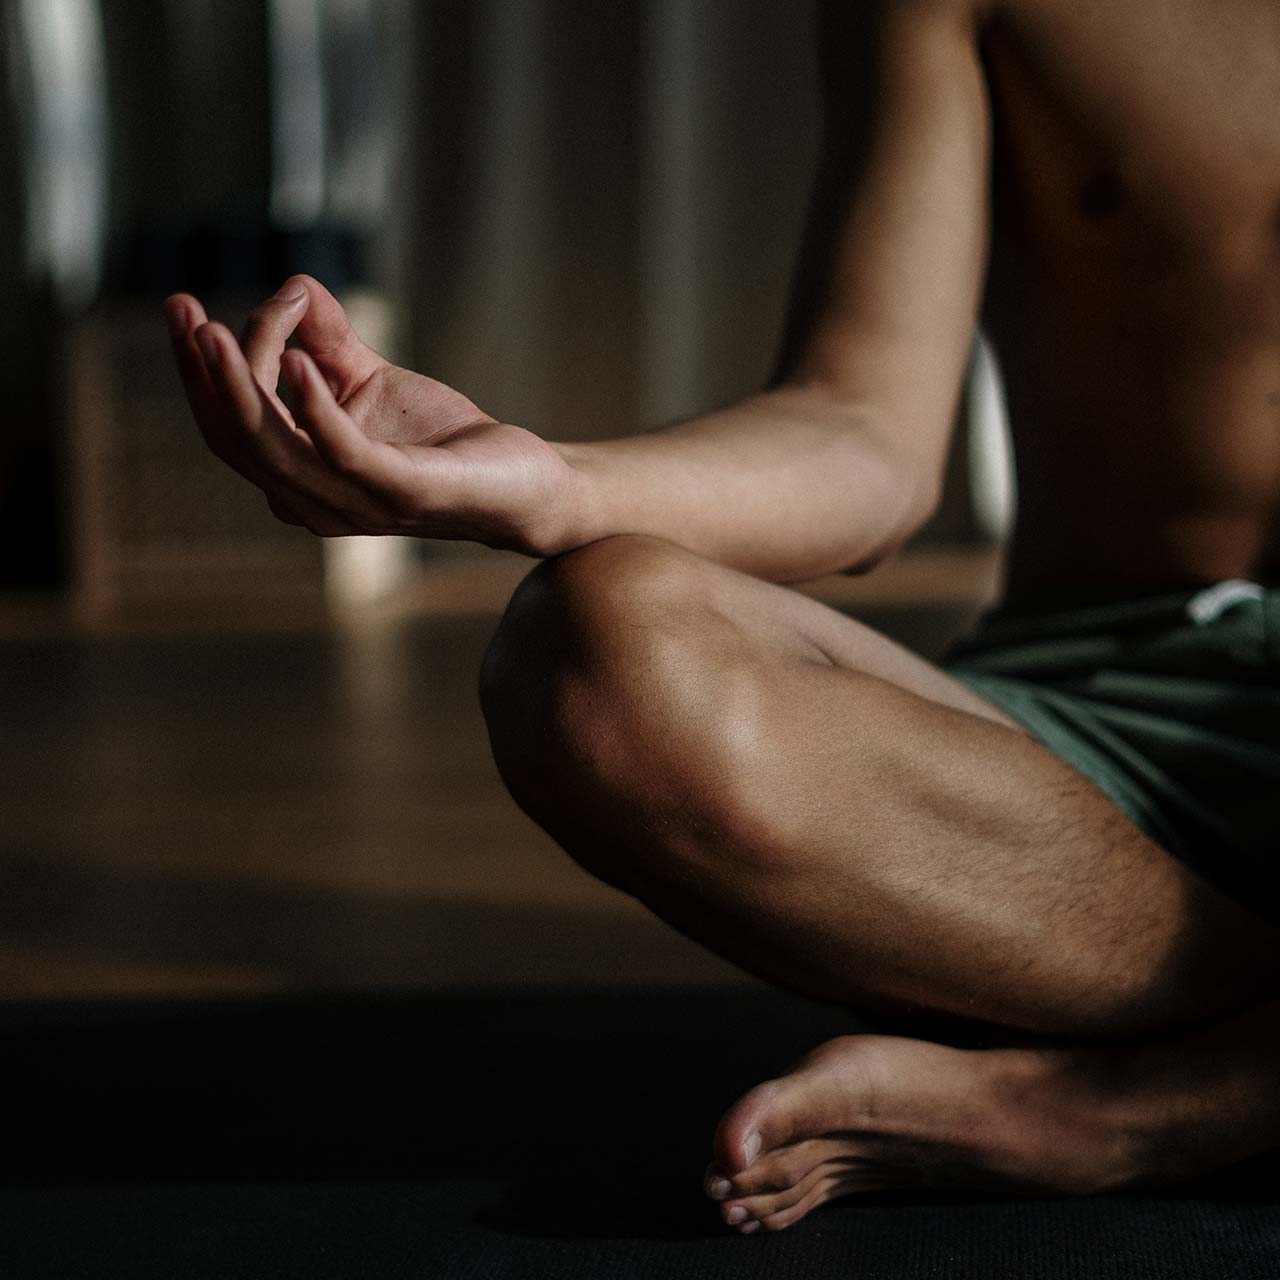 Detail photo of a man meditating